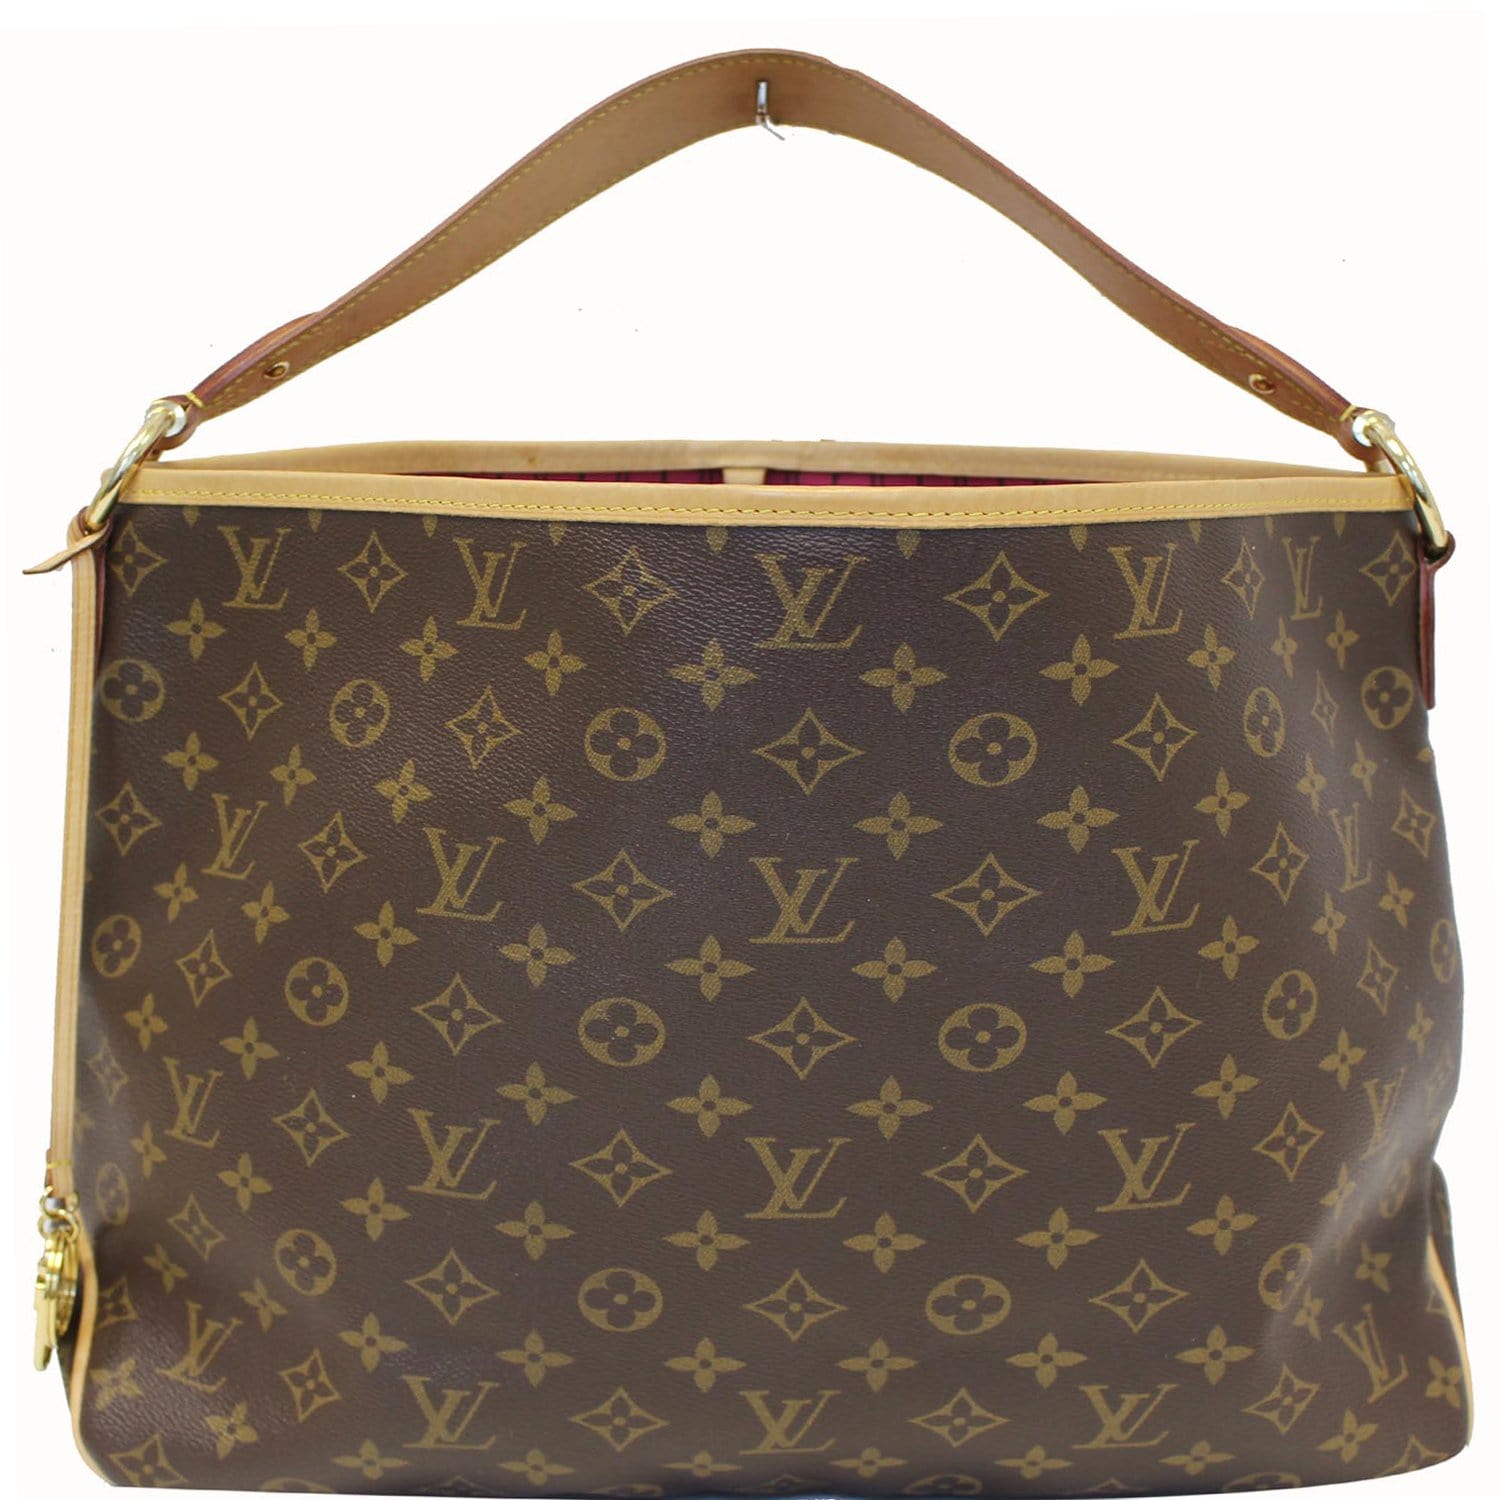 Louis Vuitton Delightful PM M40352 Brown Monogram Tote Bag 11542